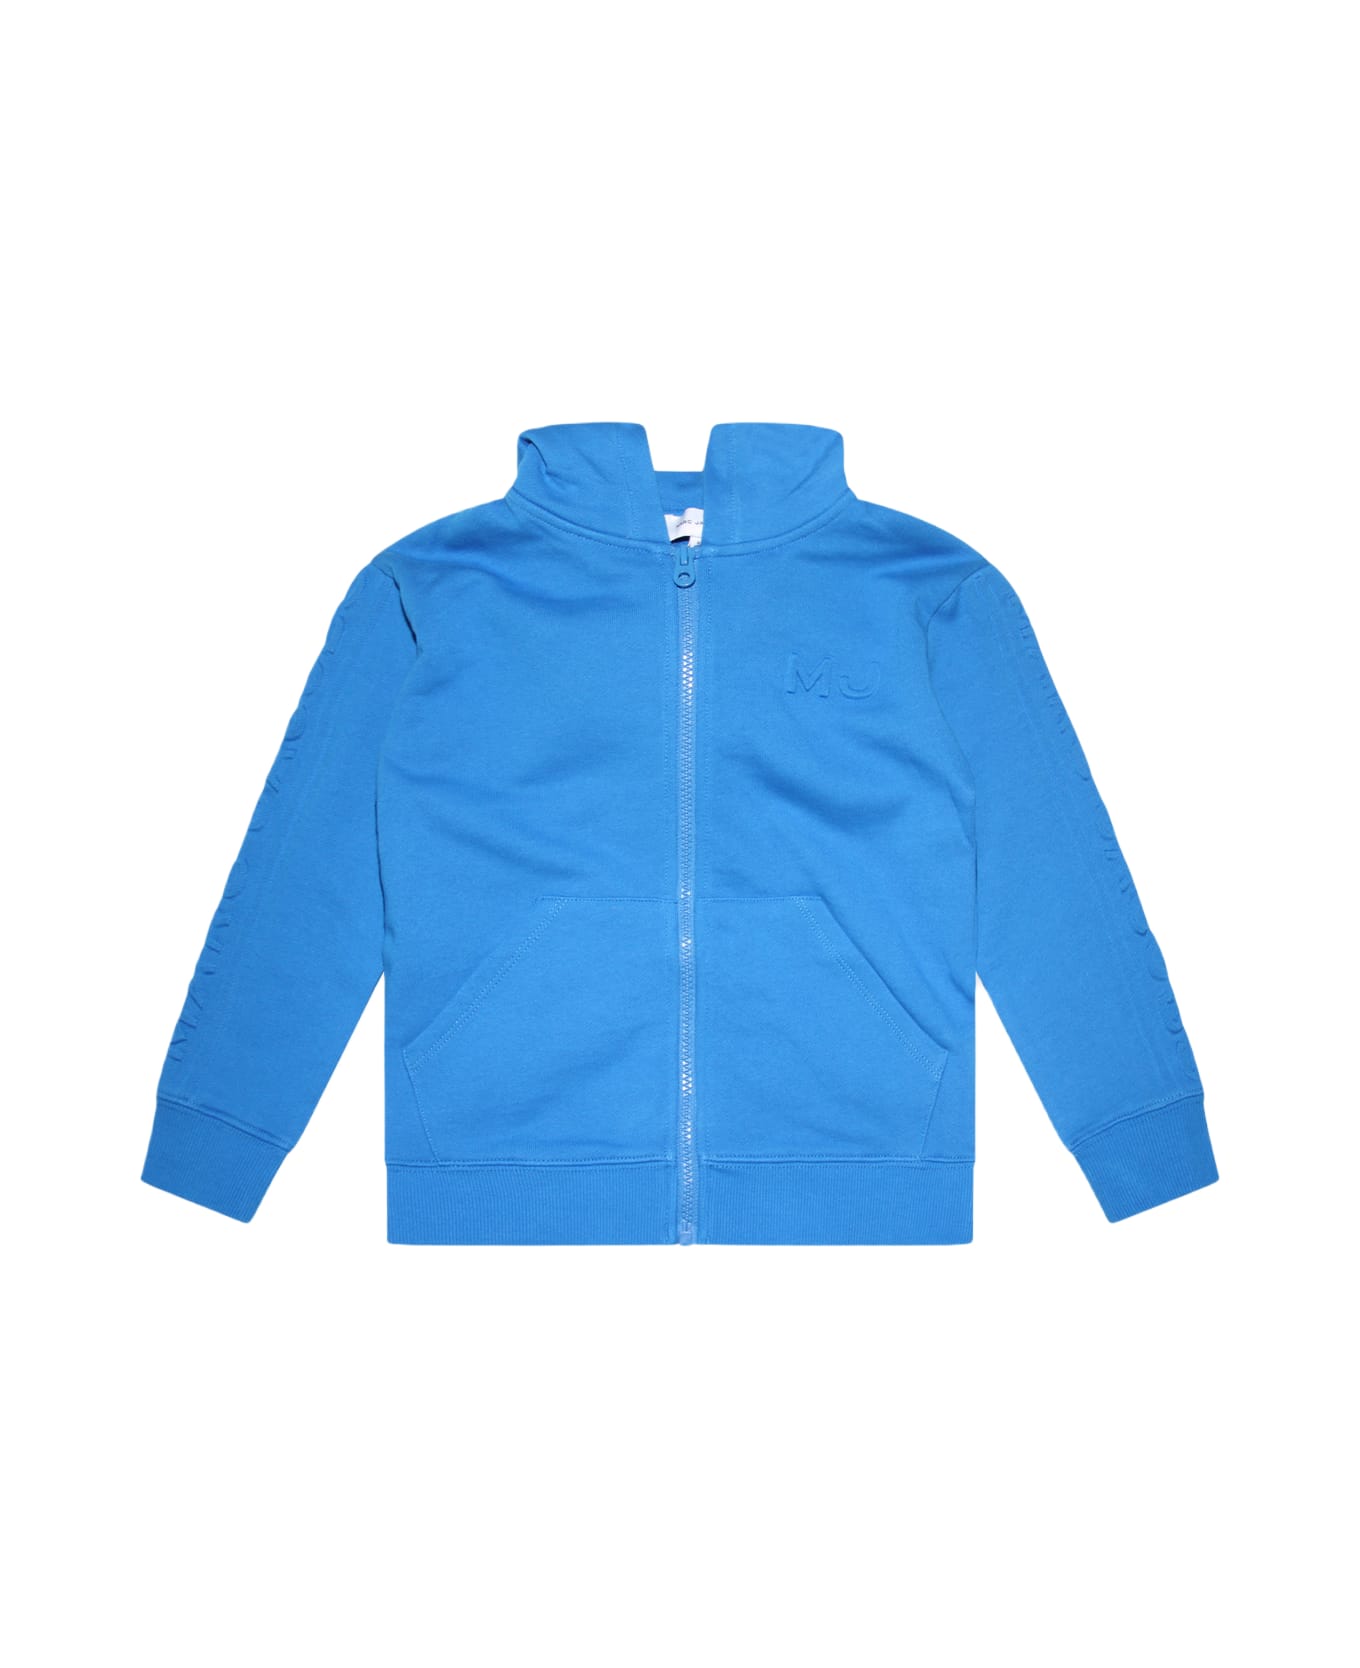 Little Marc Jacobs Cobalt Blue Cotton Sweatshirt - Blu Elettrico